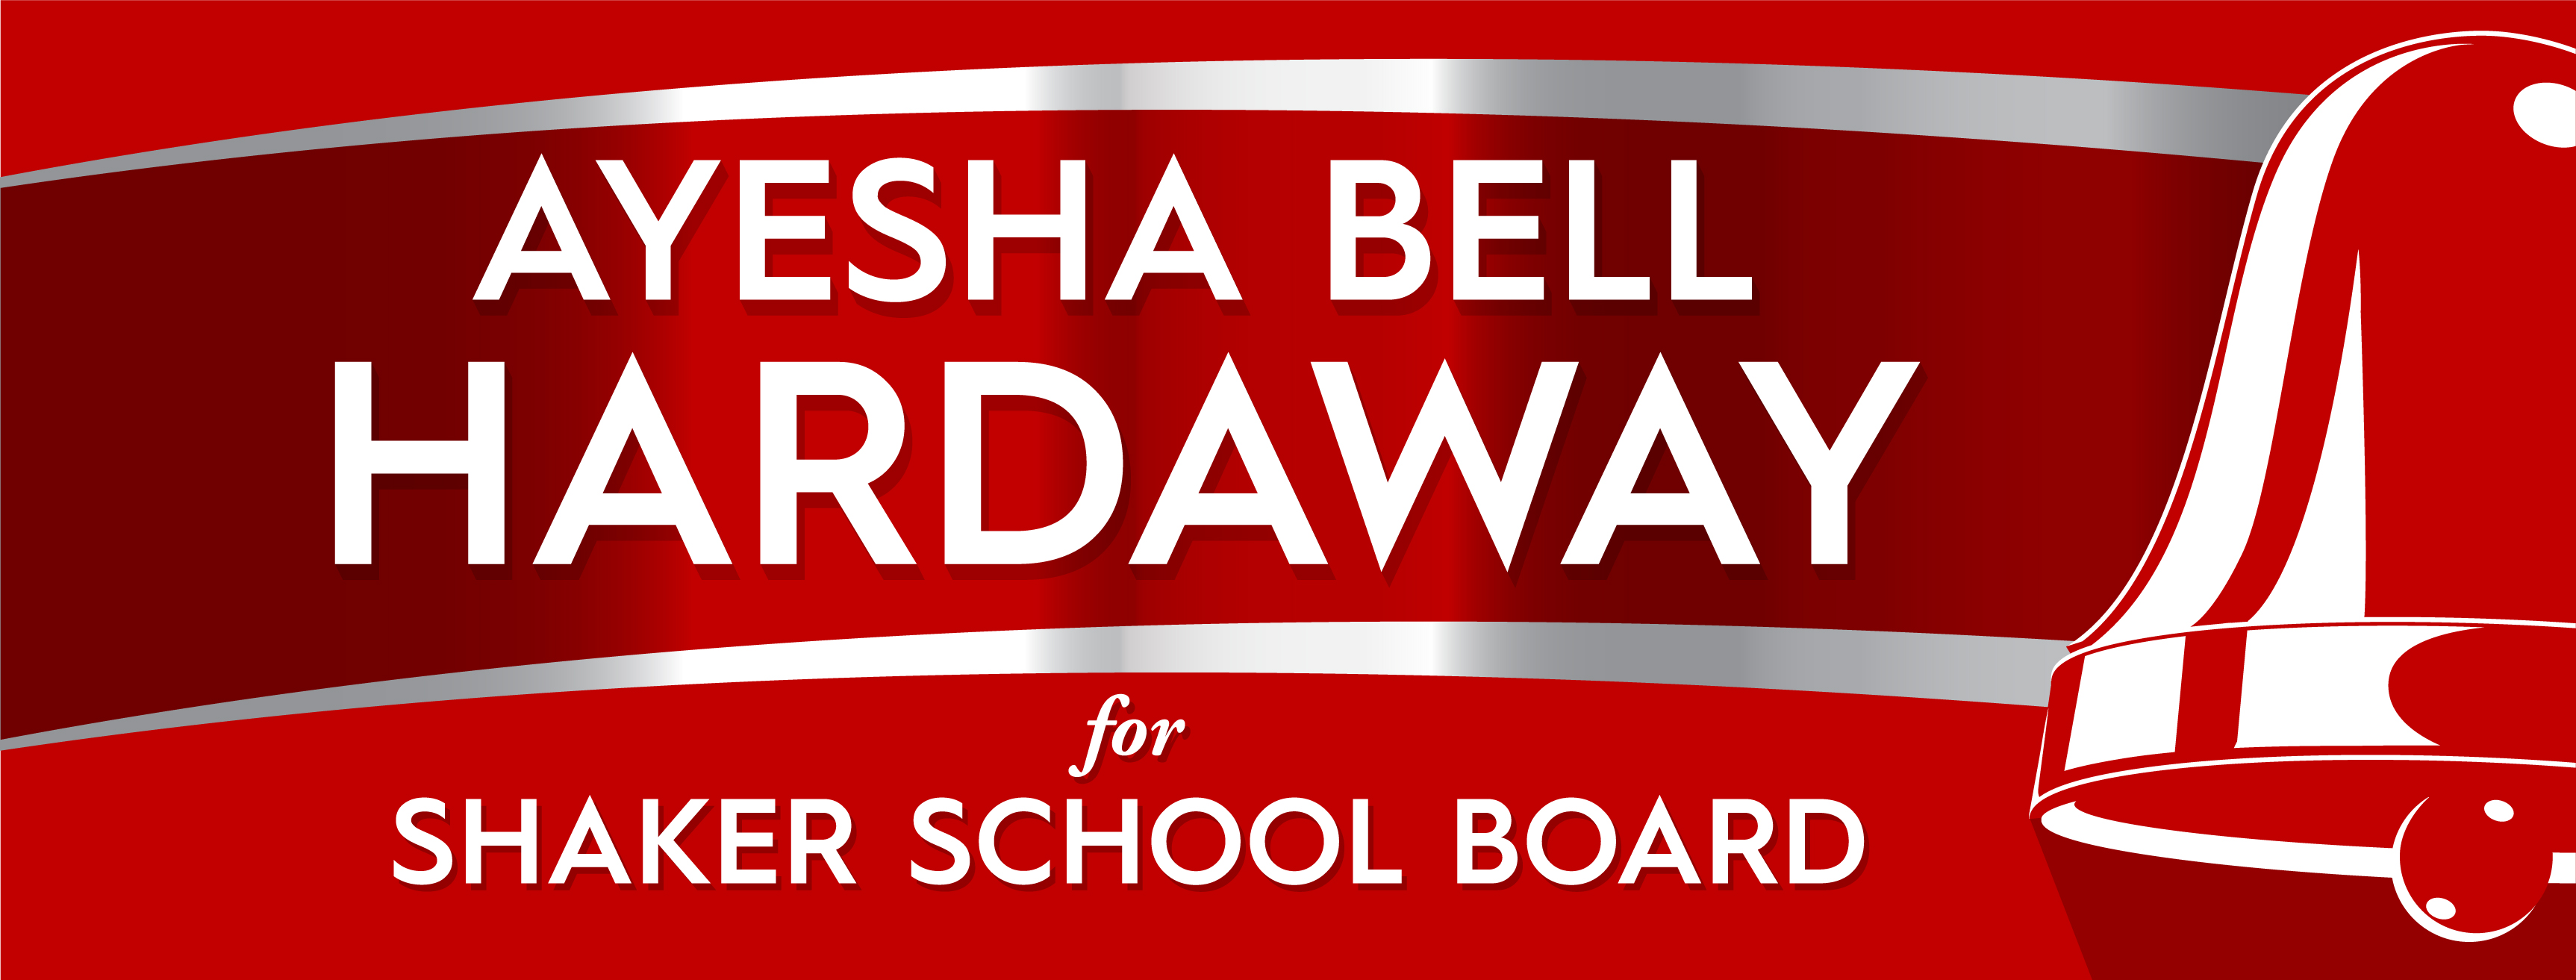 Ayesha Bell Hardaway for Shaker Schools logo